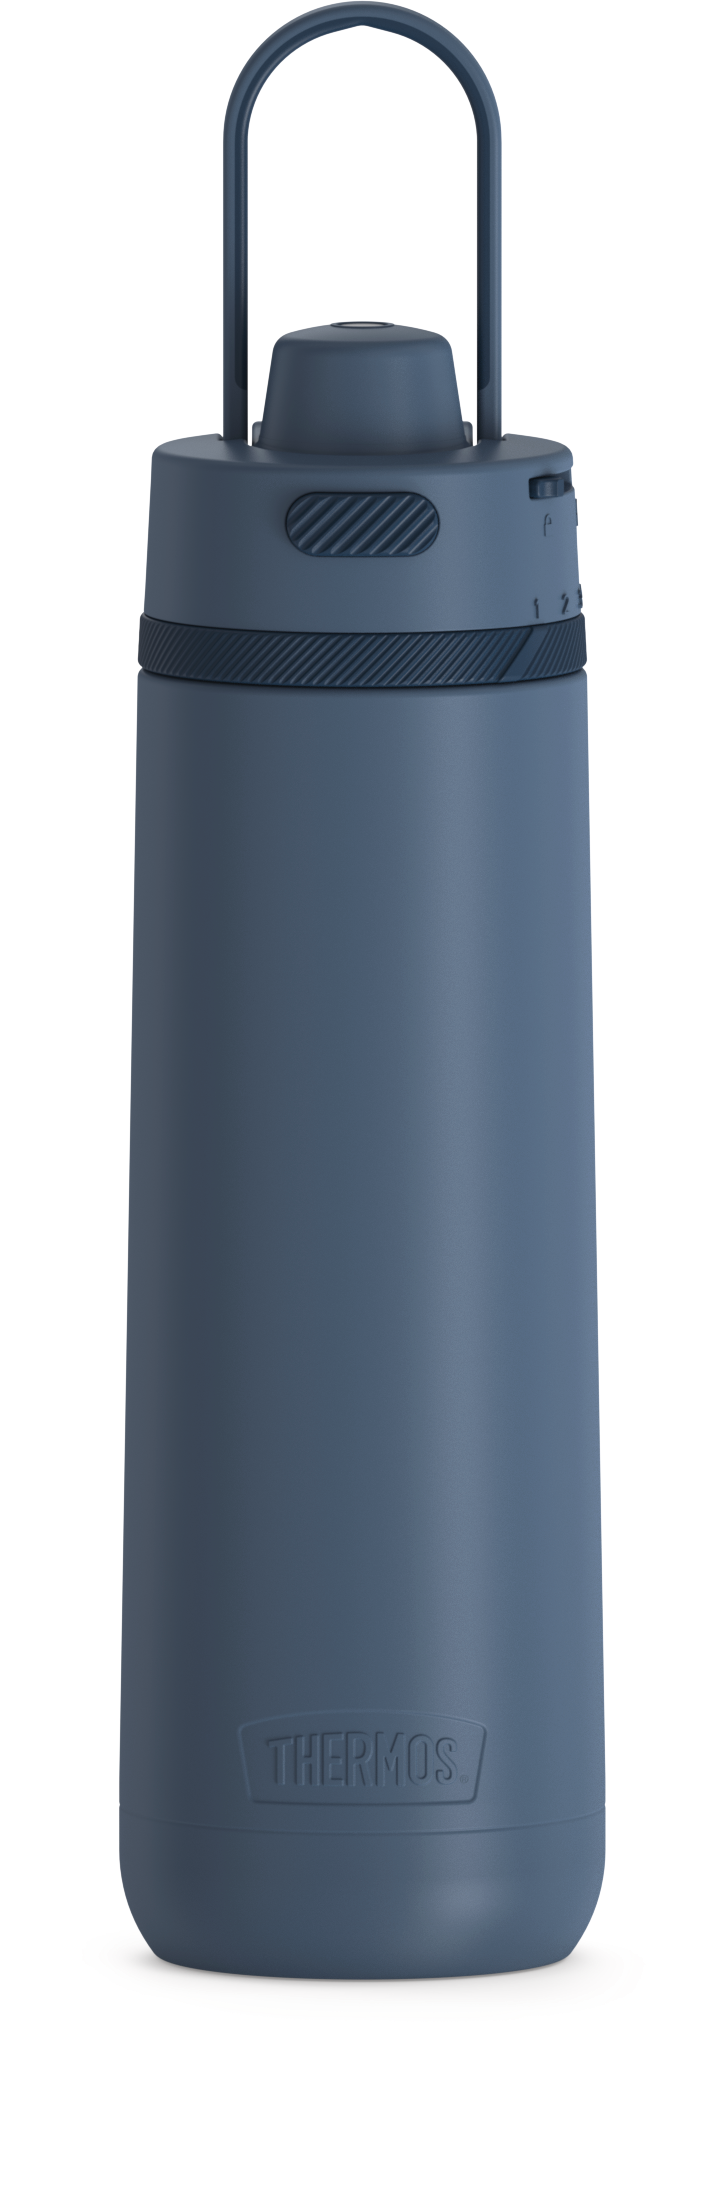 poliéster, Dos Compartimentos Thermos Bolsa térmica para la Comida Color Granate 